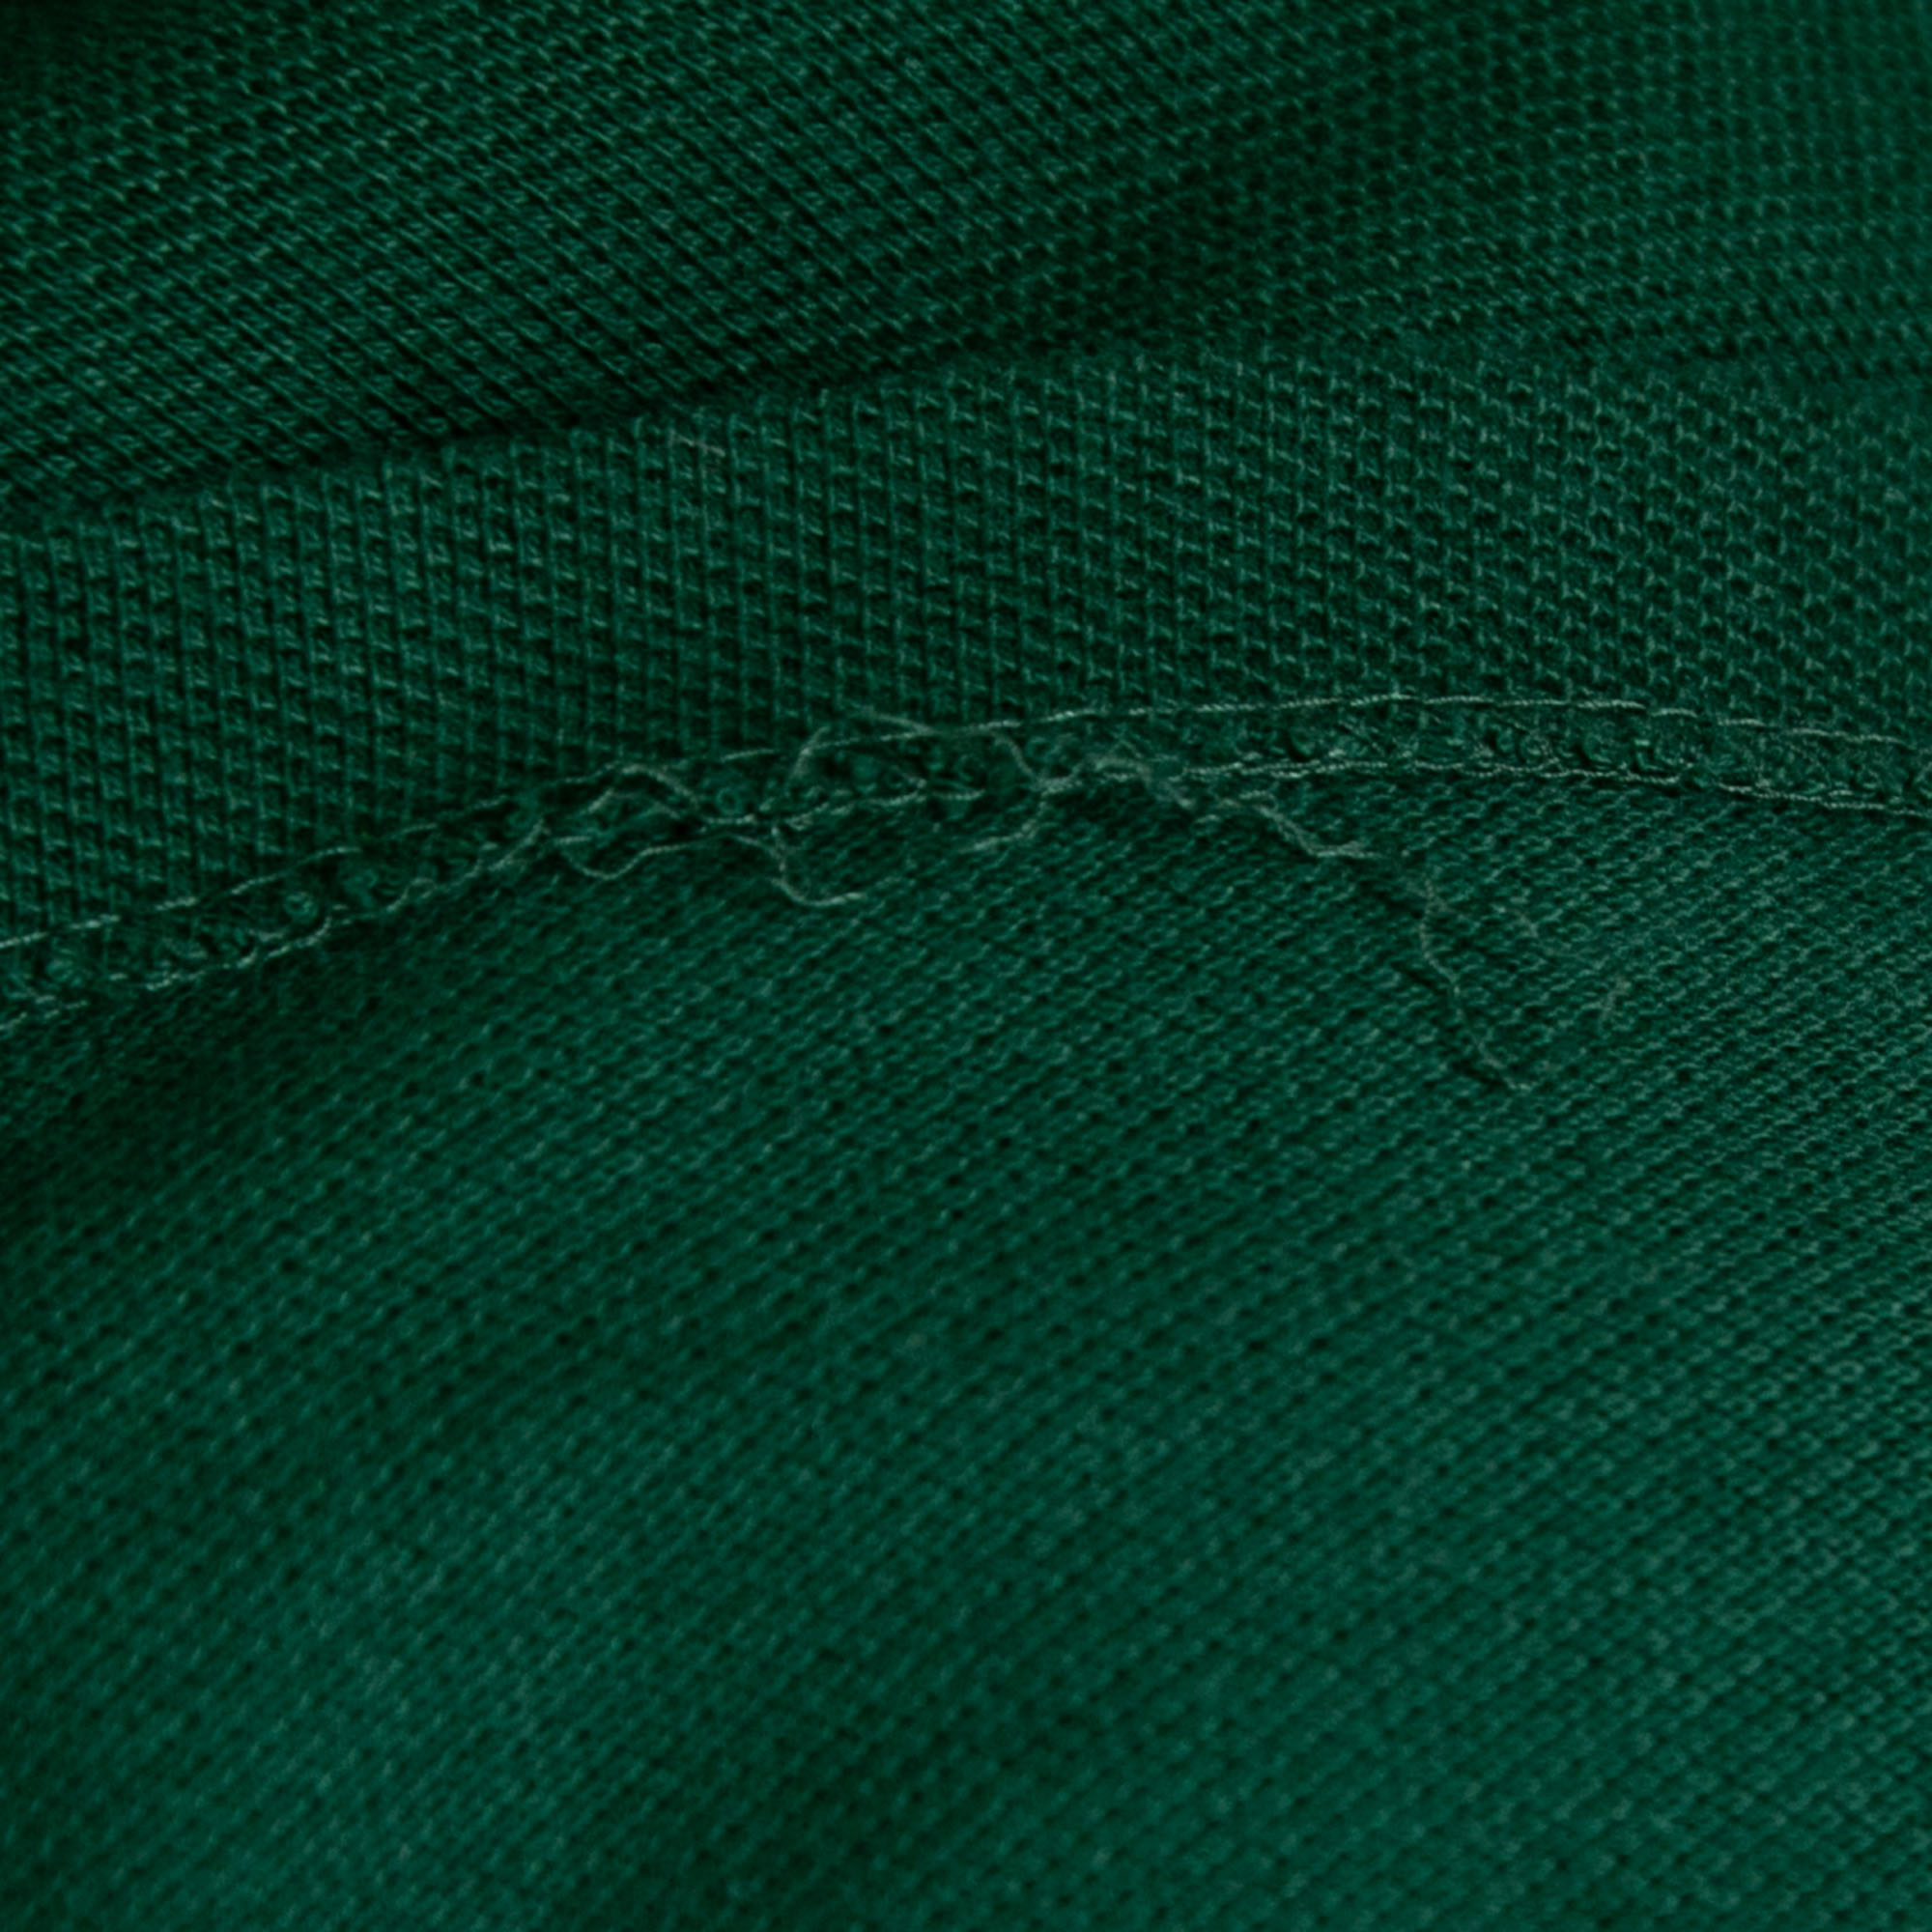 Polo Ralph Lauren Dark Green Cotton Pique Custom Slim Fit Polo T-Shirt XXL